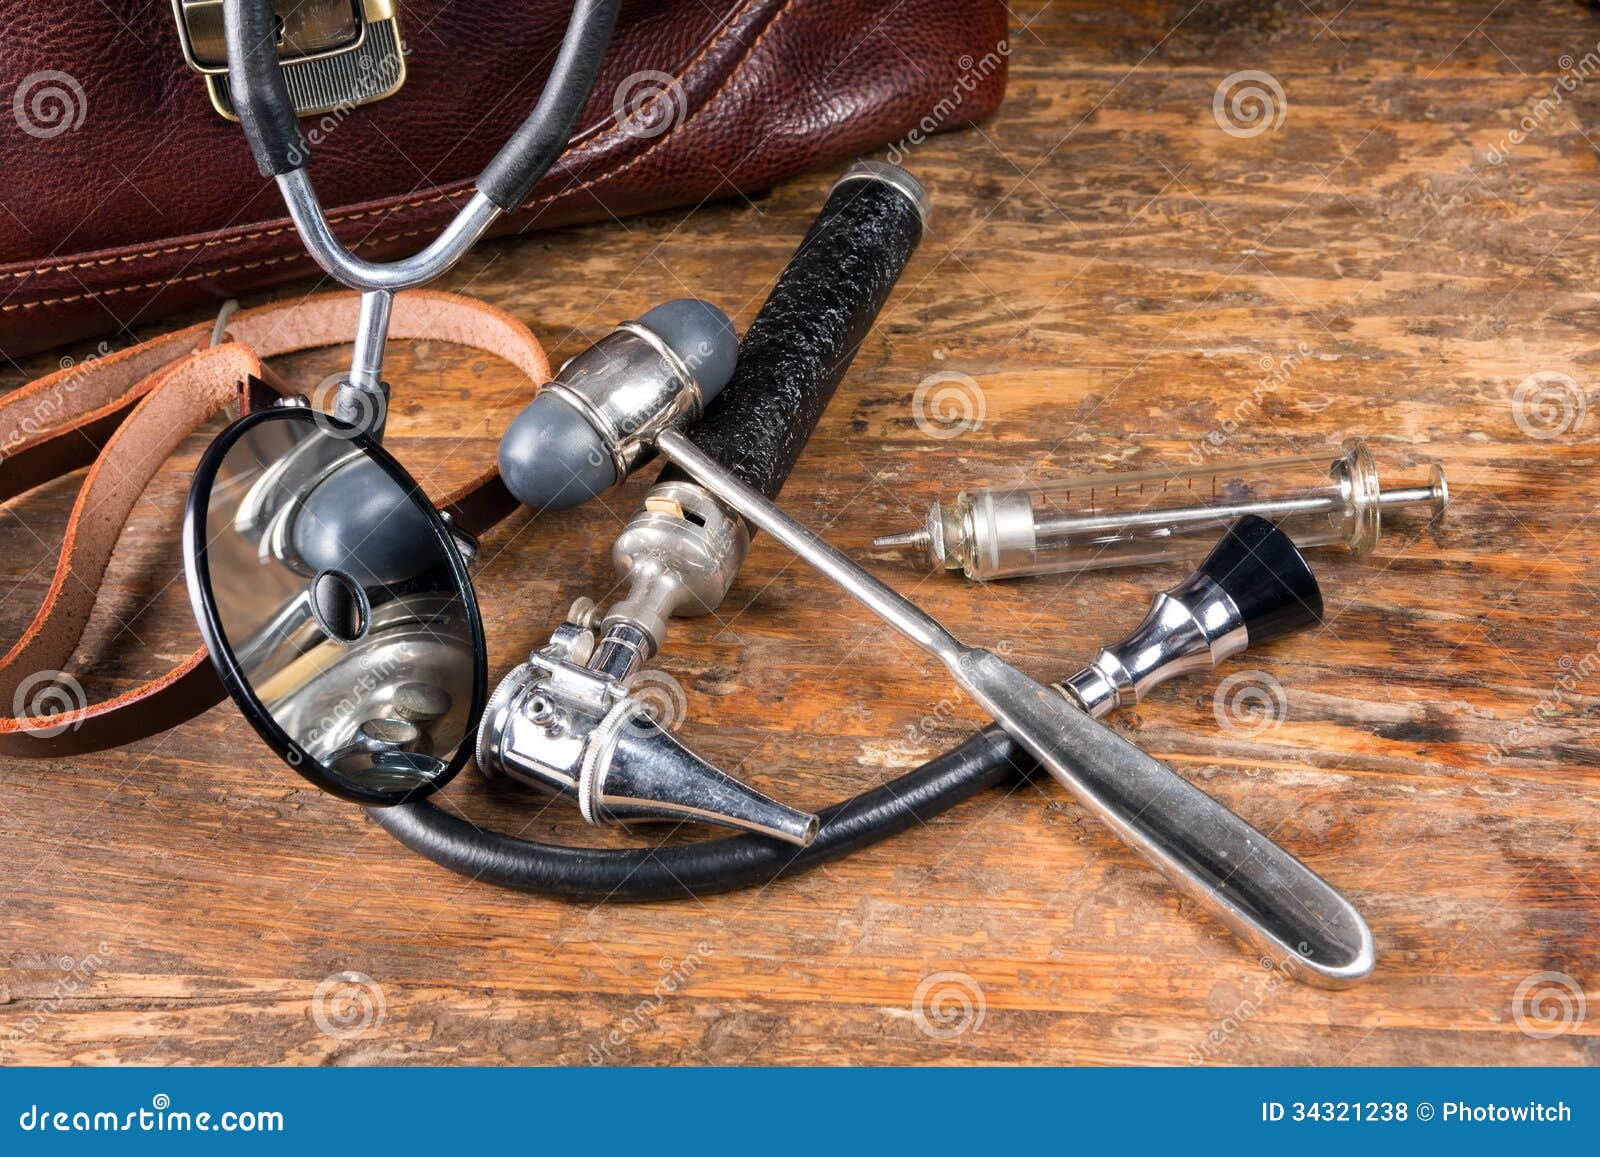 Antique Doctor Tools